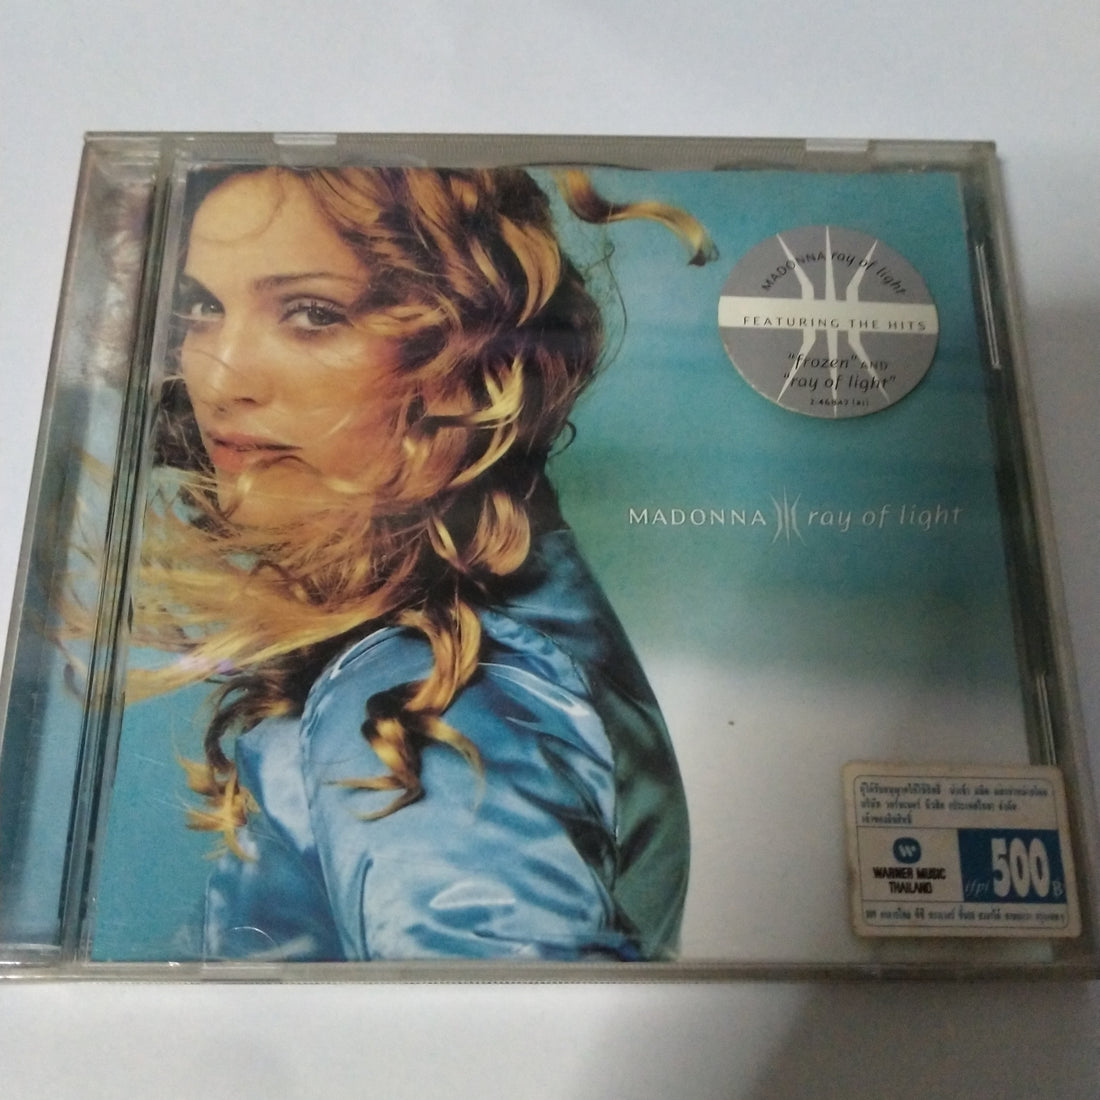 Ray of Light Madonna CD 1998 Album 93624684725